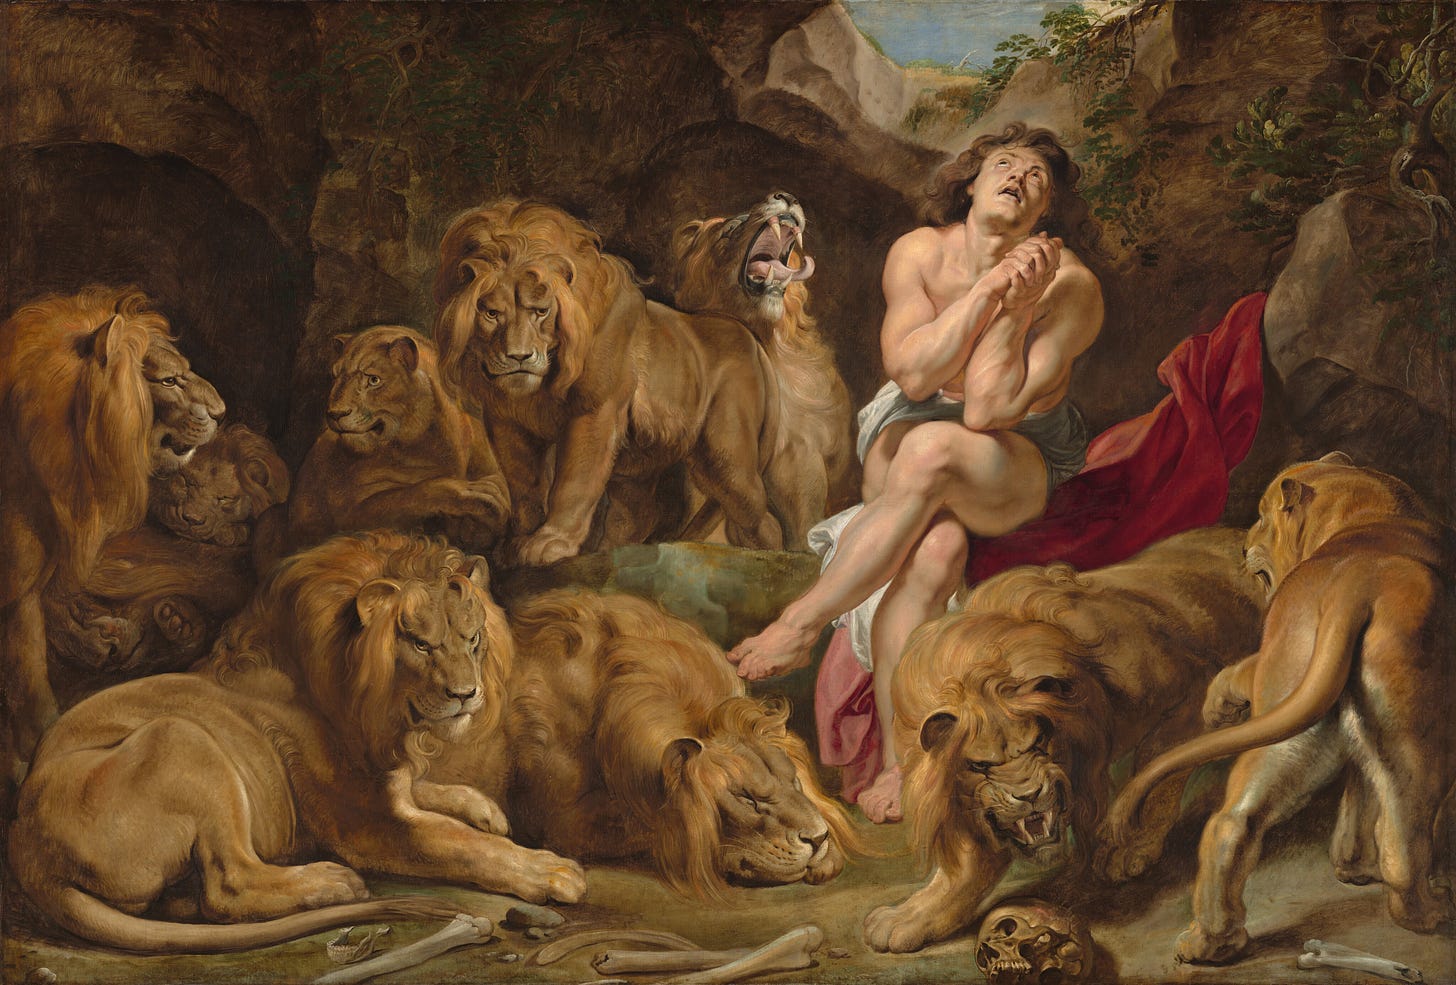 Daniel in the Lions' Den, c. 1614/1616 by Sir Peter Paul Rubens